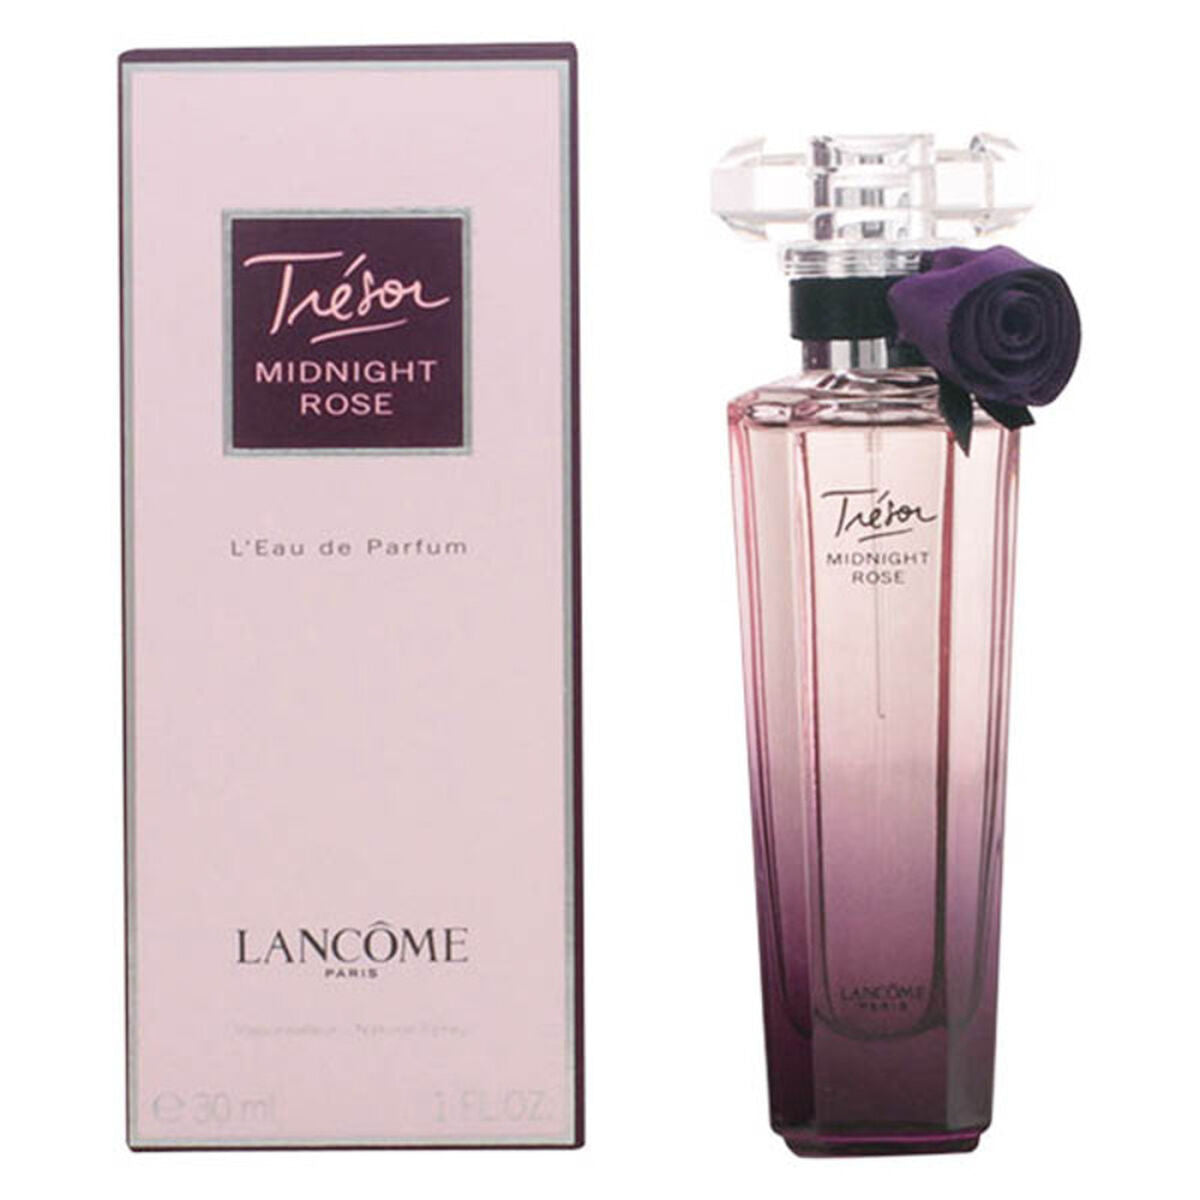 Kaufe Damenparfum Tresor Midnight Rose Lancôme EDP limited edition bei AWK Flagship um € 56.00